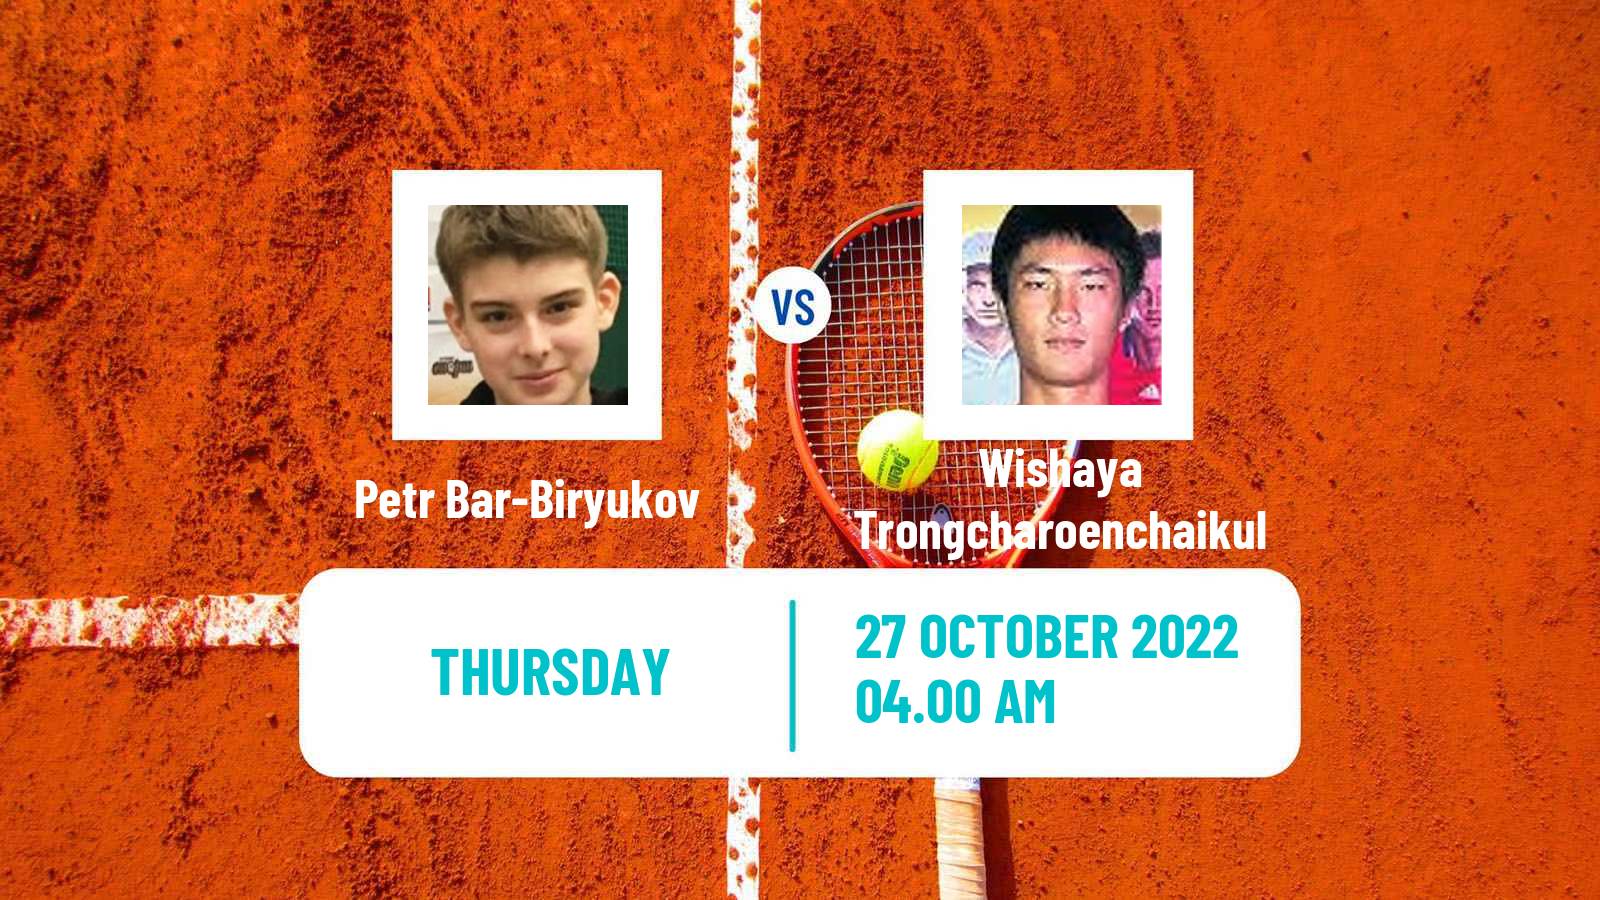 Tennis ITF Tournaments Petr Bar-Biryukov - Wishaya Trongcharoenchaikul